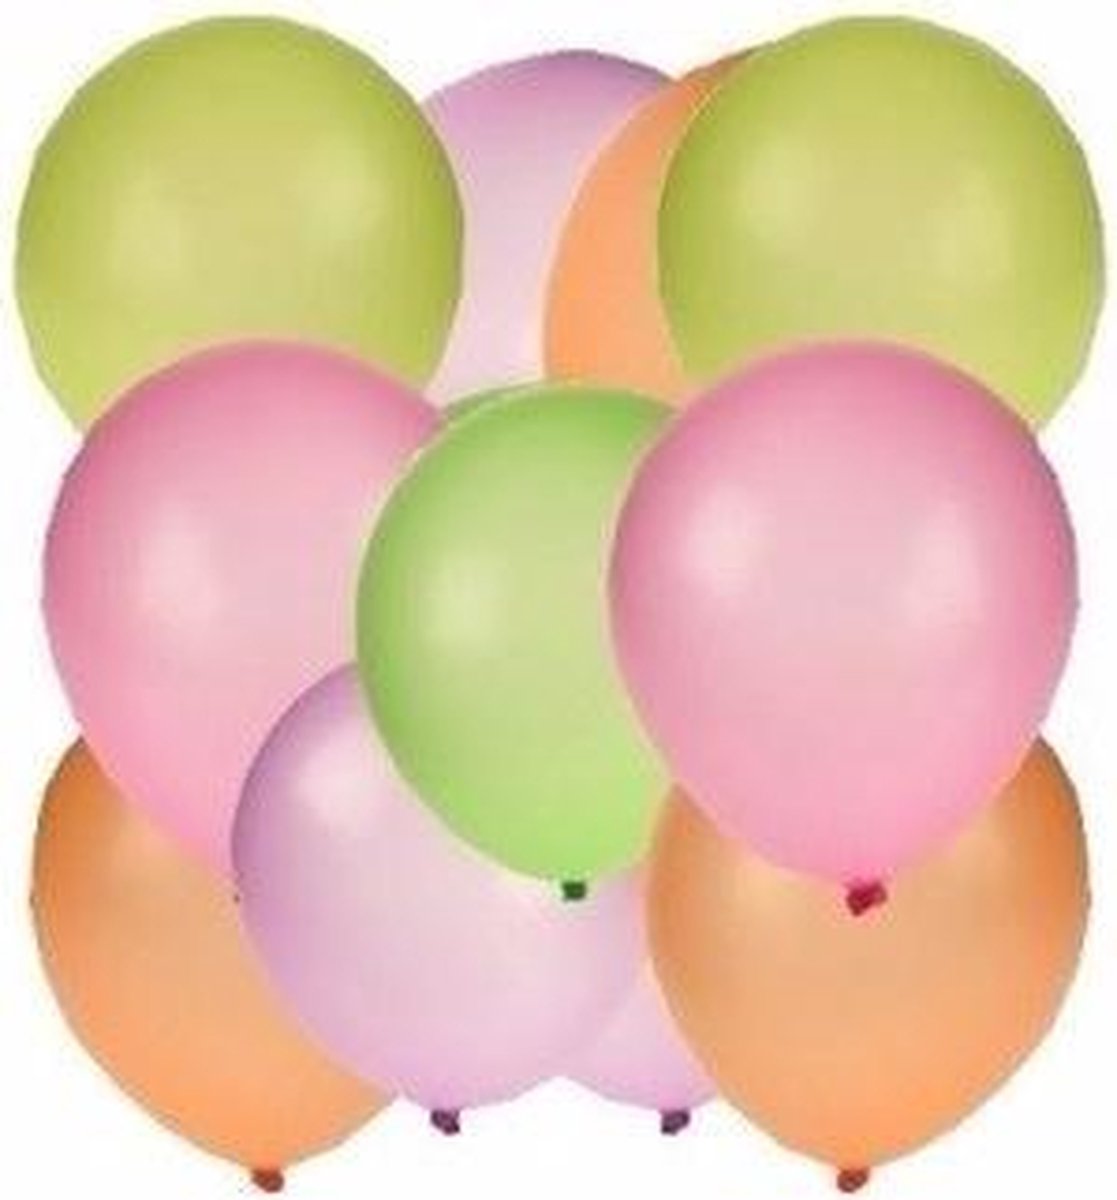 Verplicht levering aan huis historisch Neon ballonnen 150 stuks - Feestdecoratie/versiering - Feestballonnen |  bol.com